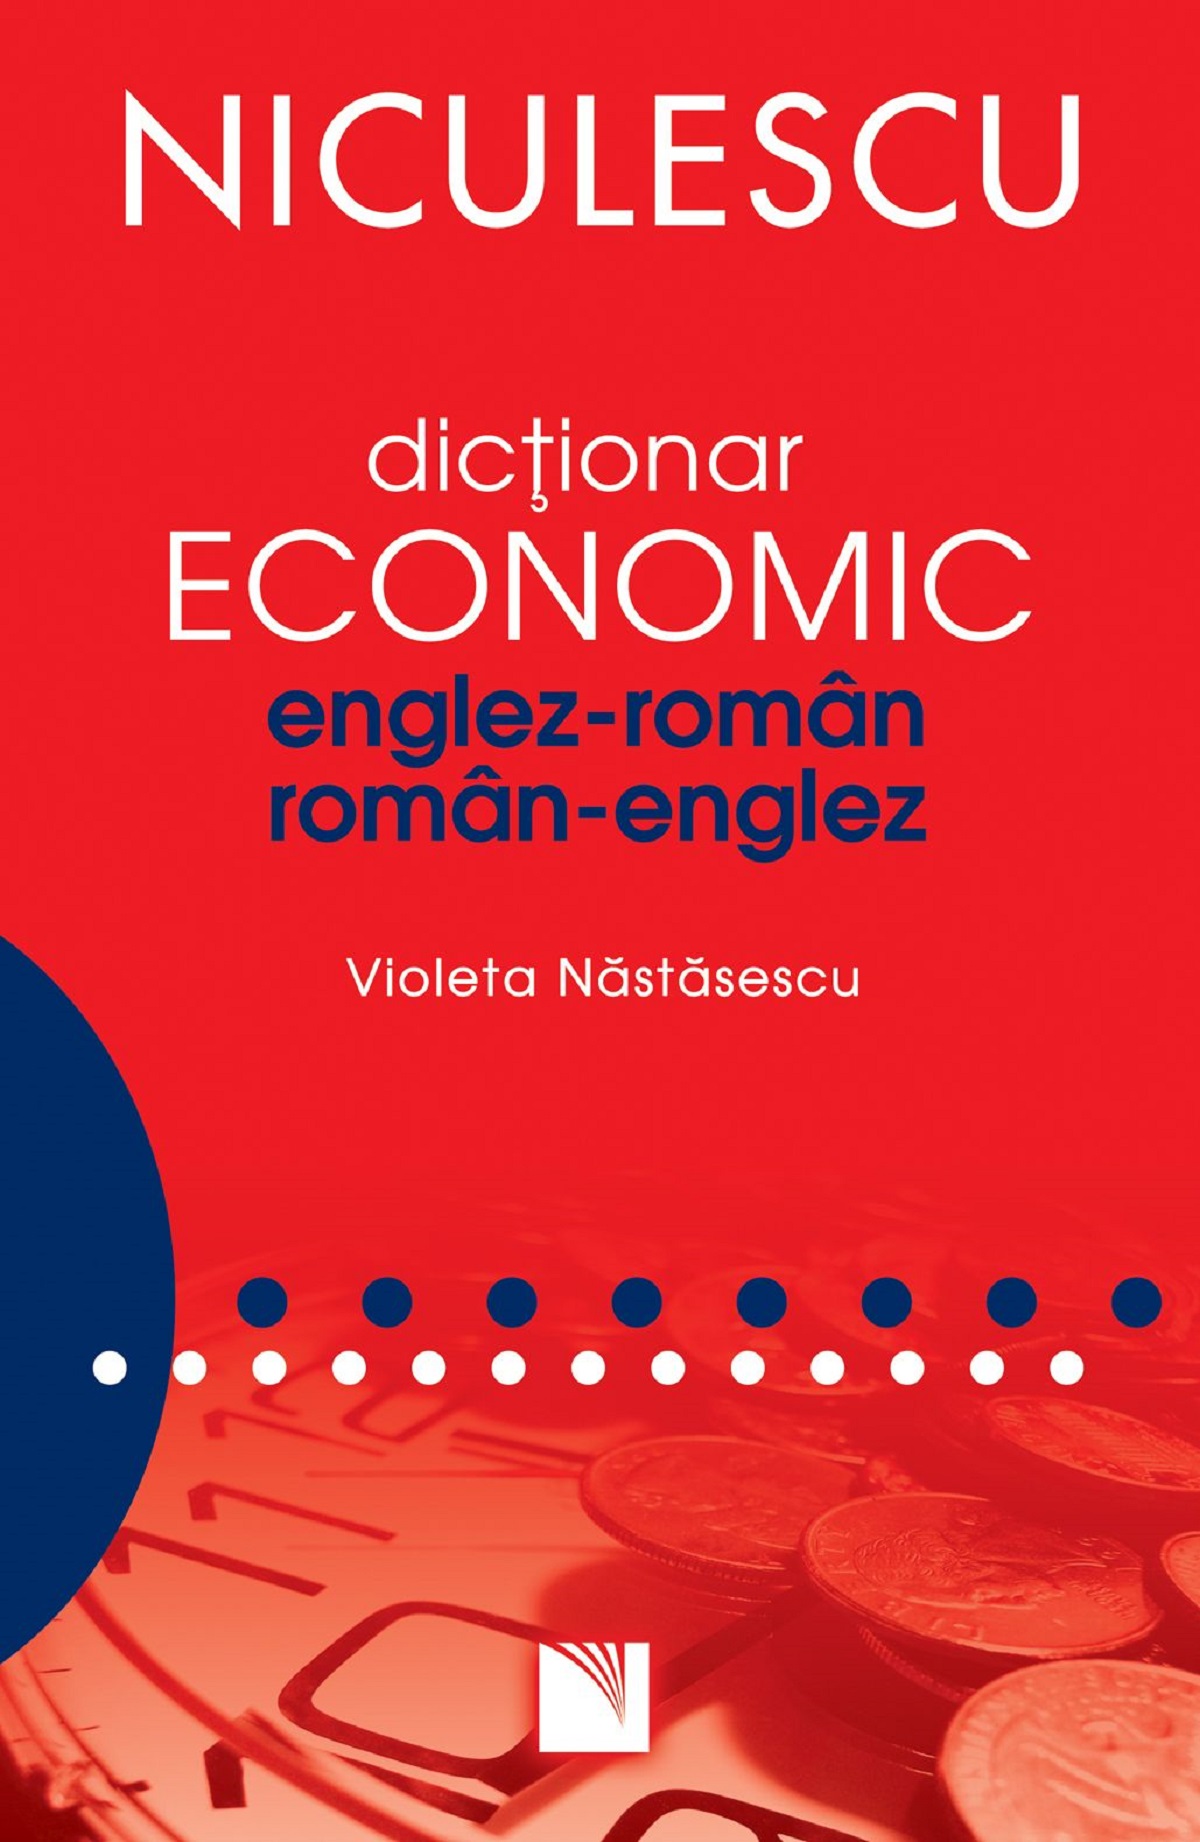 Dictionar economic englez-roman, roman-englez  - Violeta Nastasescu